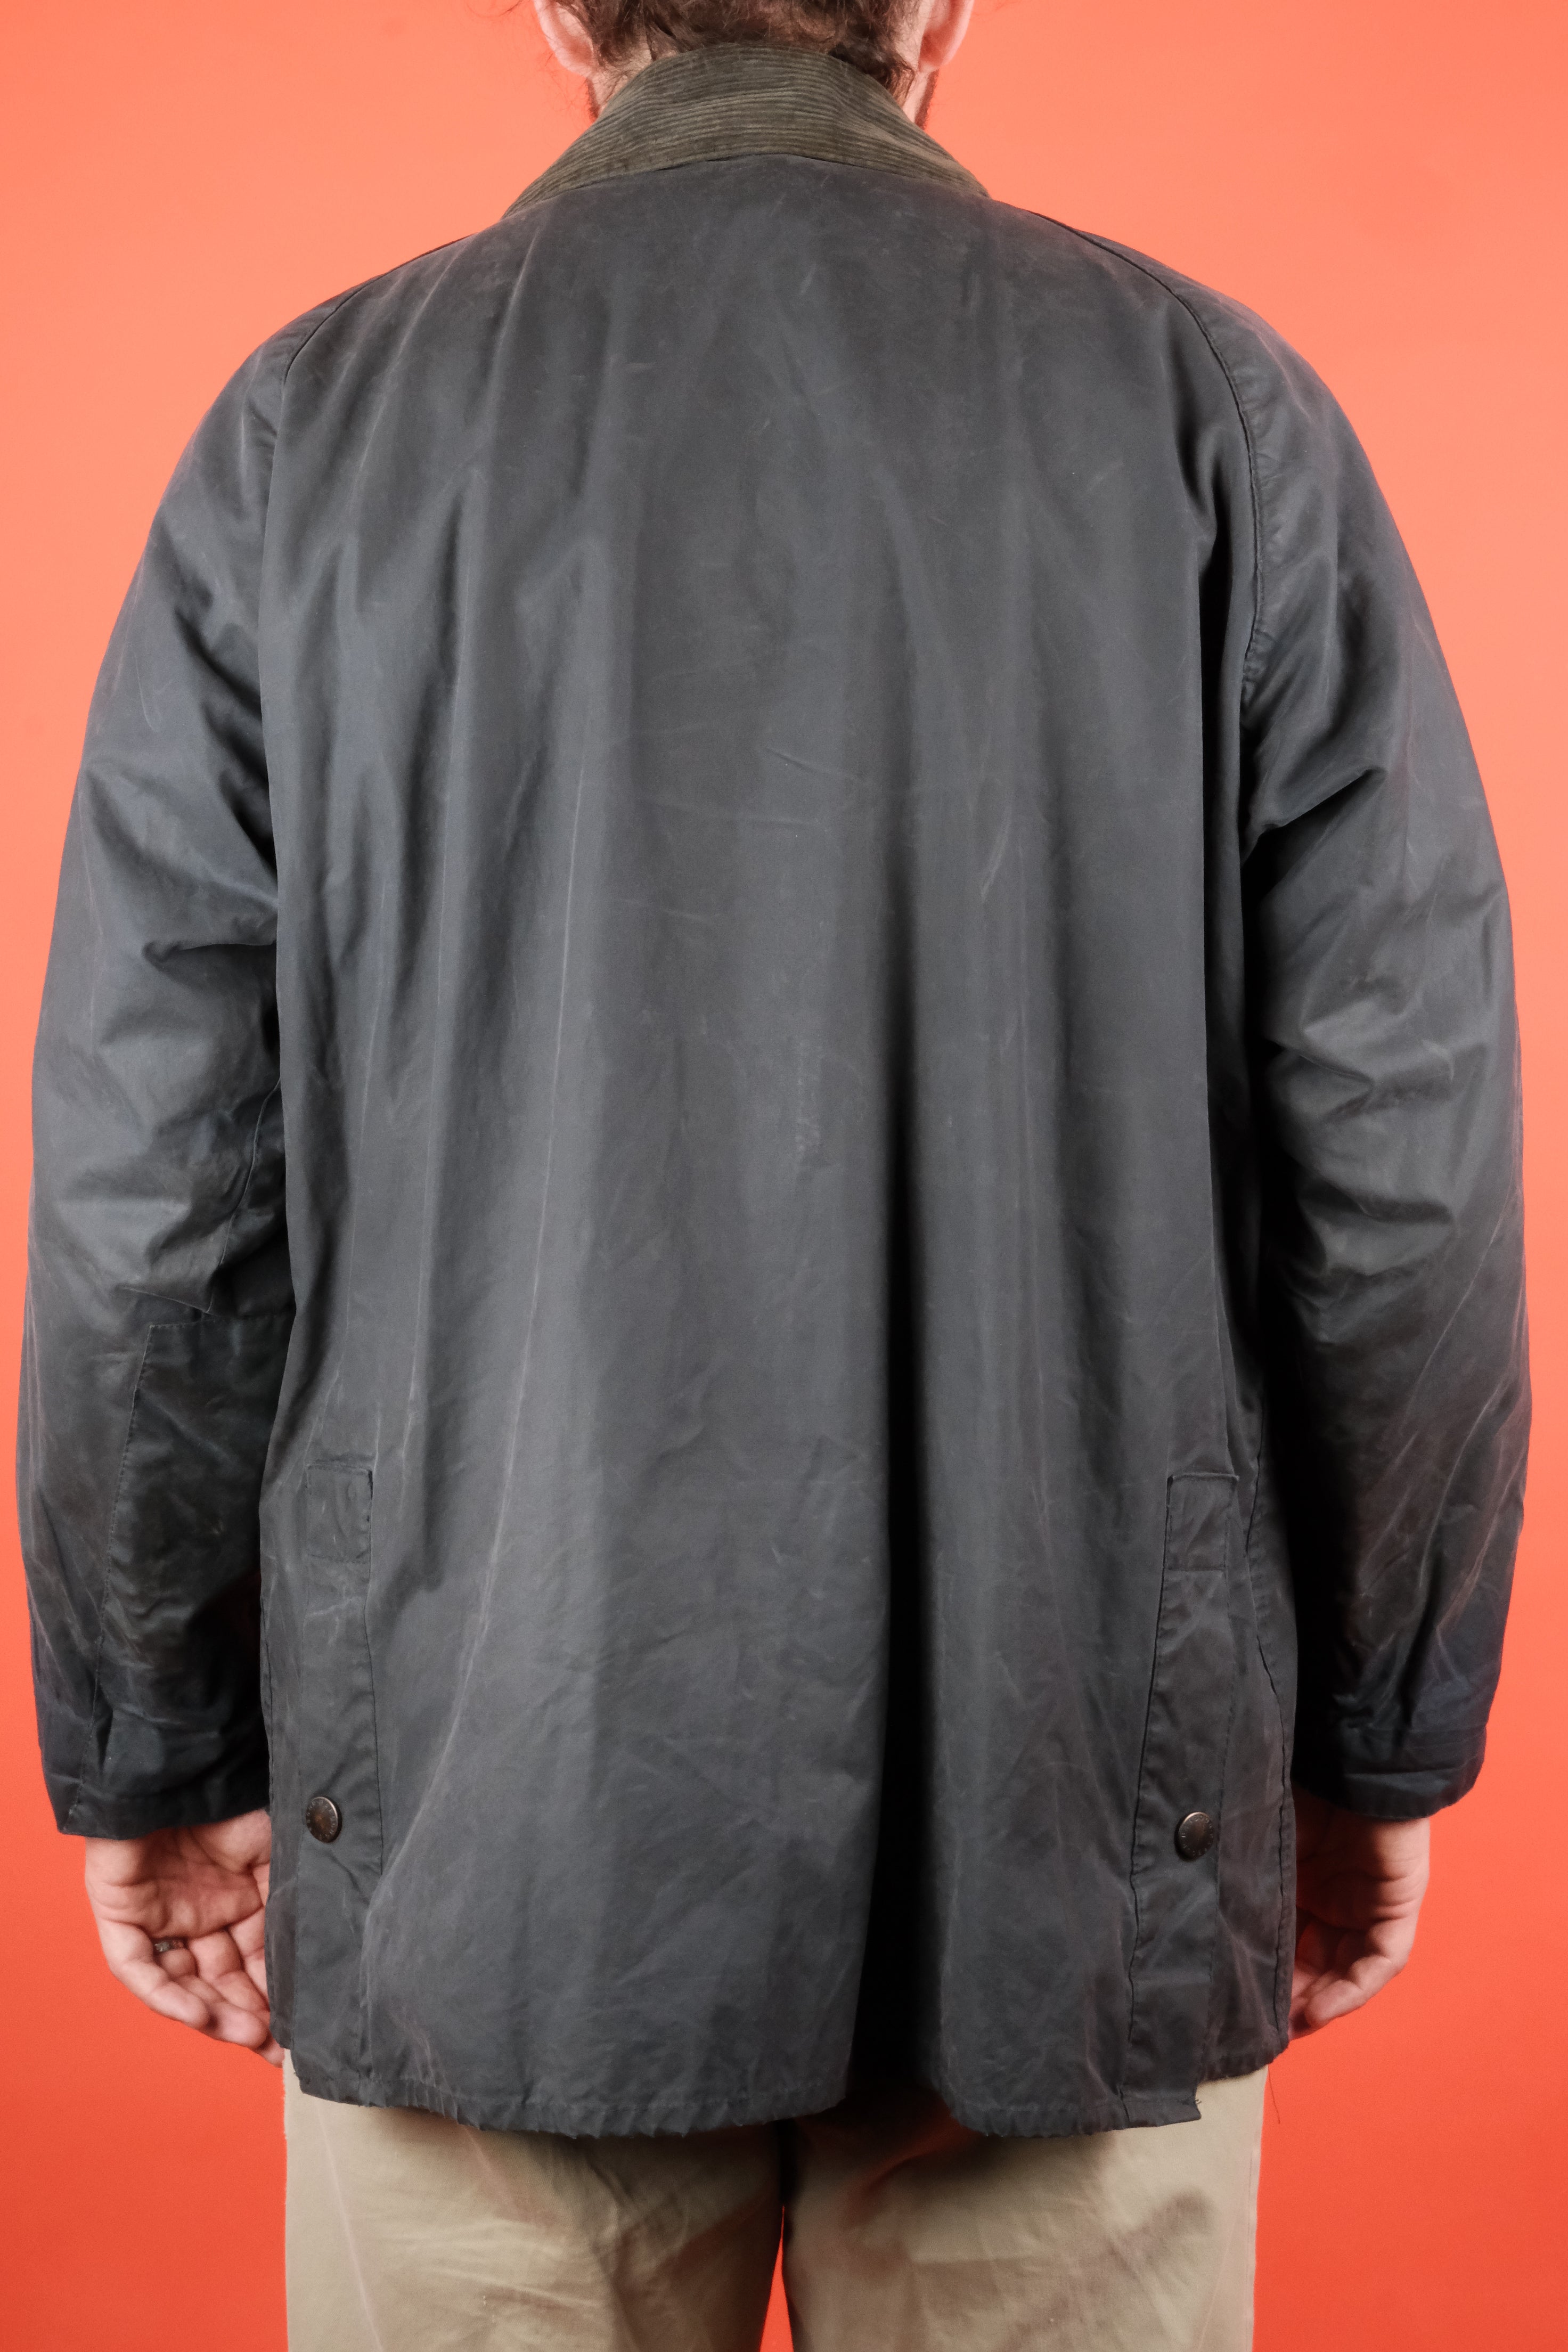 Vintage Wax Jackets for Men ~ Clochard92.com